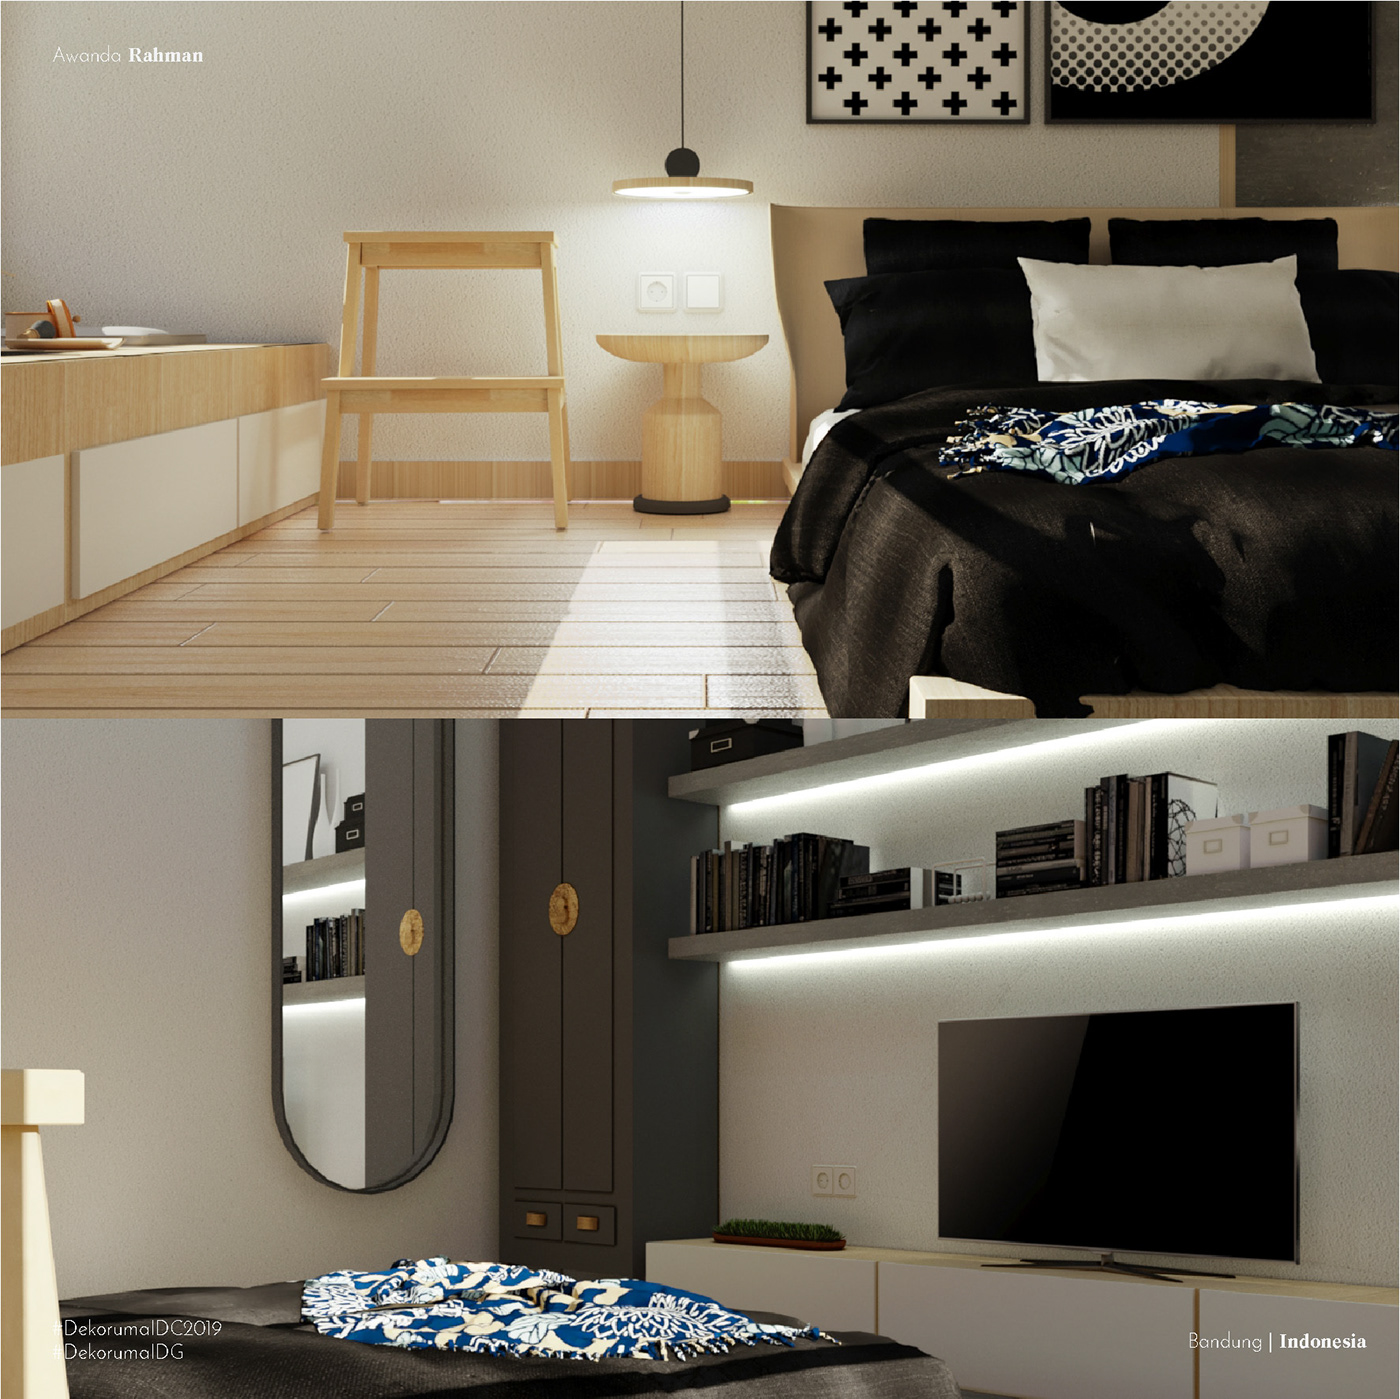 bedroom design japanese Scandinavian Interior interiordesign black White monochrome